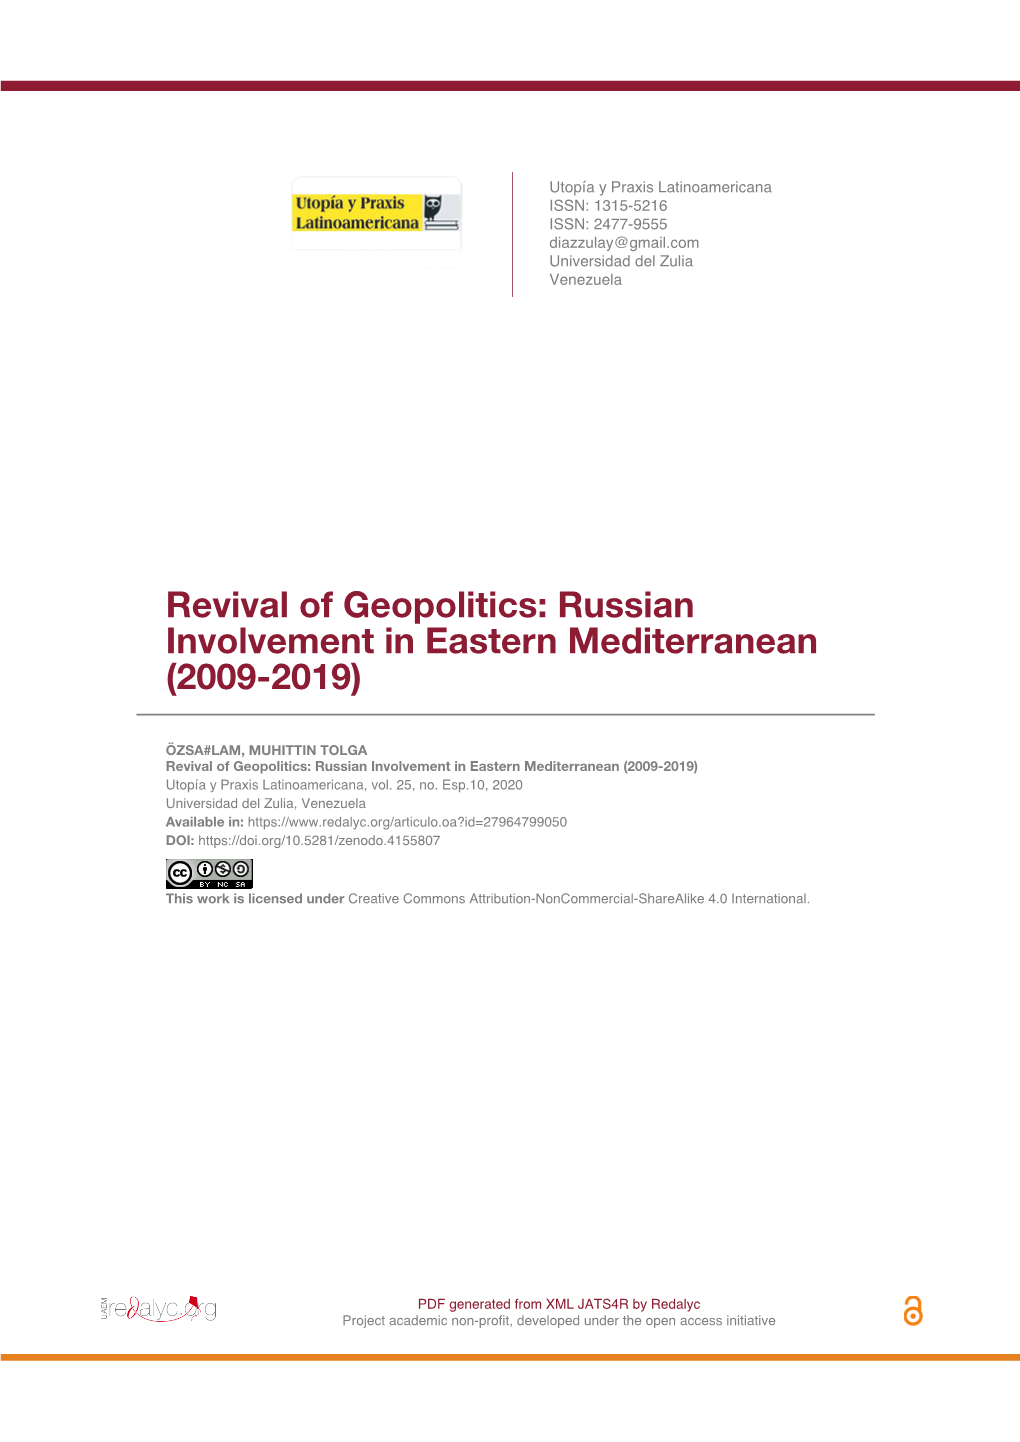 Revival of Geopolitics: Russian Involvement in Eastern Mediterranean (2009-2019)